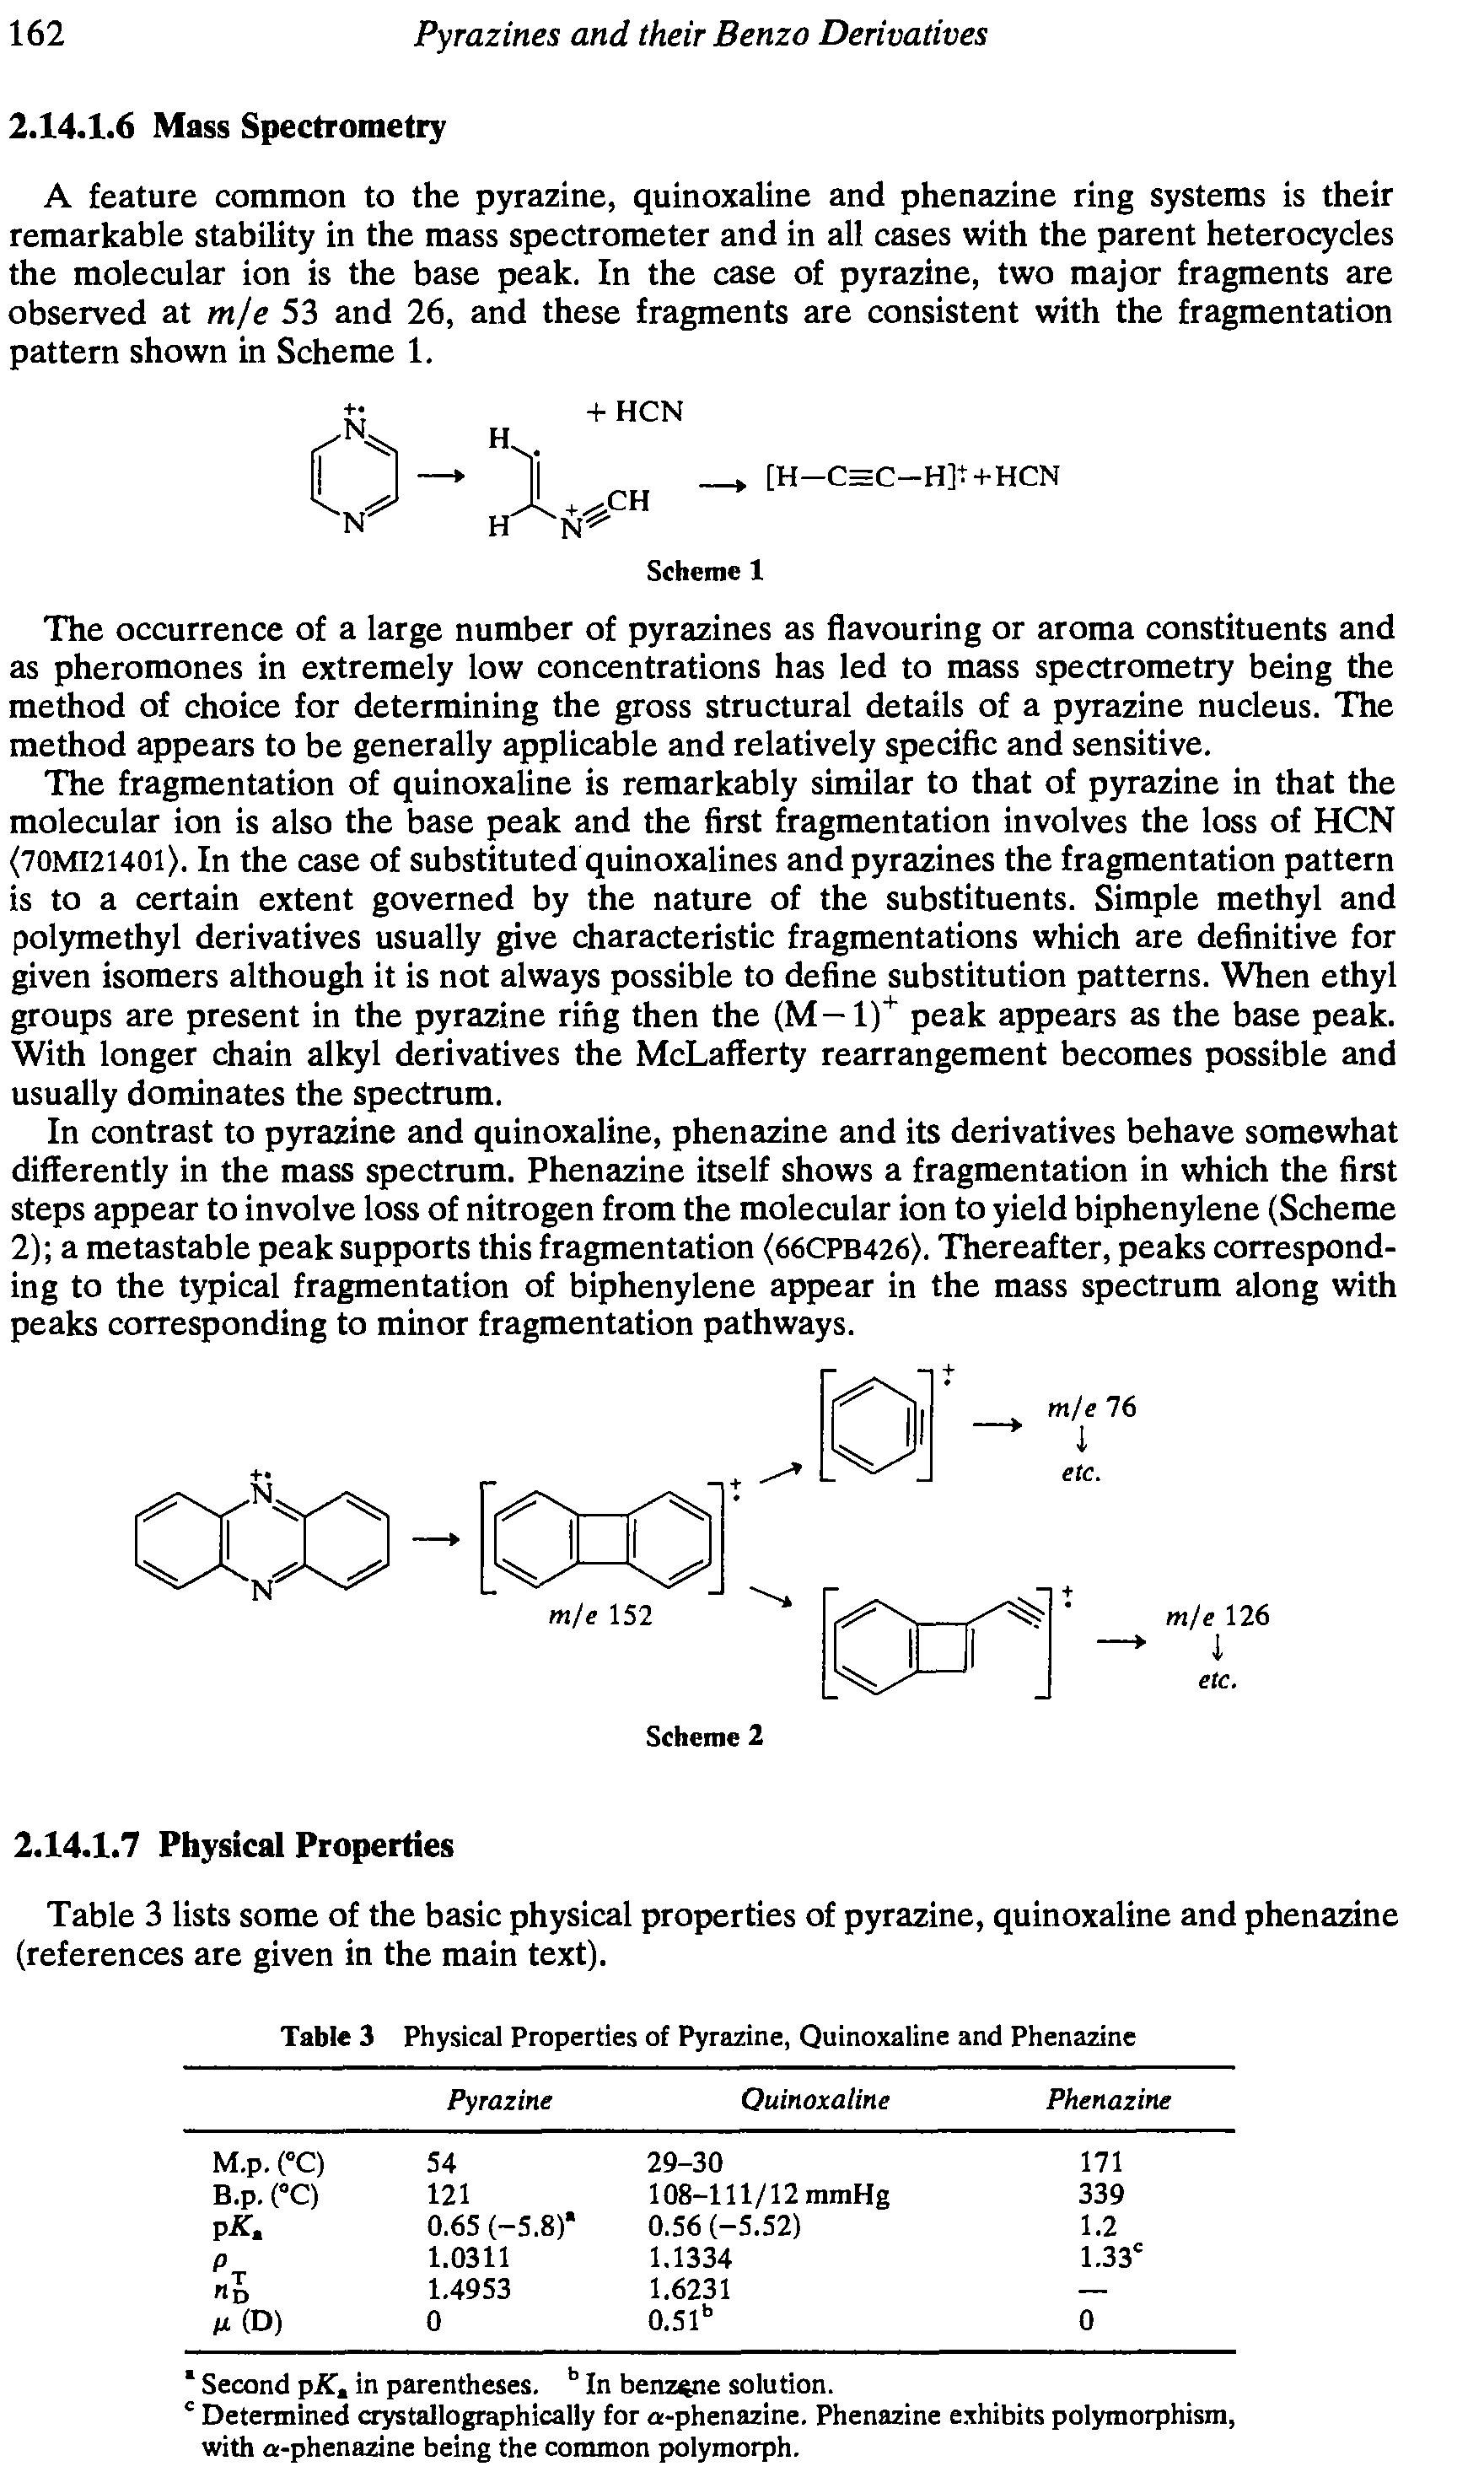 Table 3 Physical Properties of Pyrazine, Quinoxaline and Phenazine...